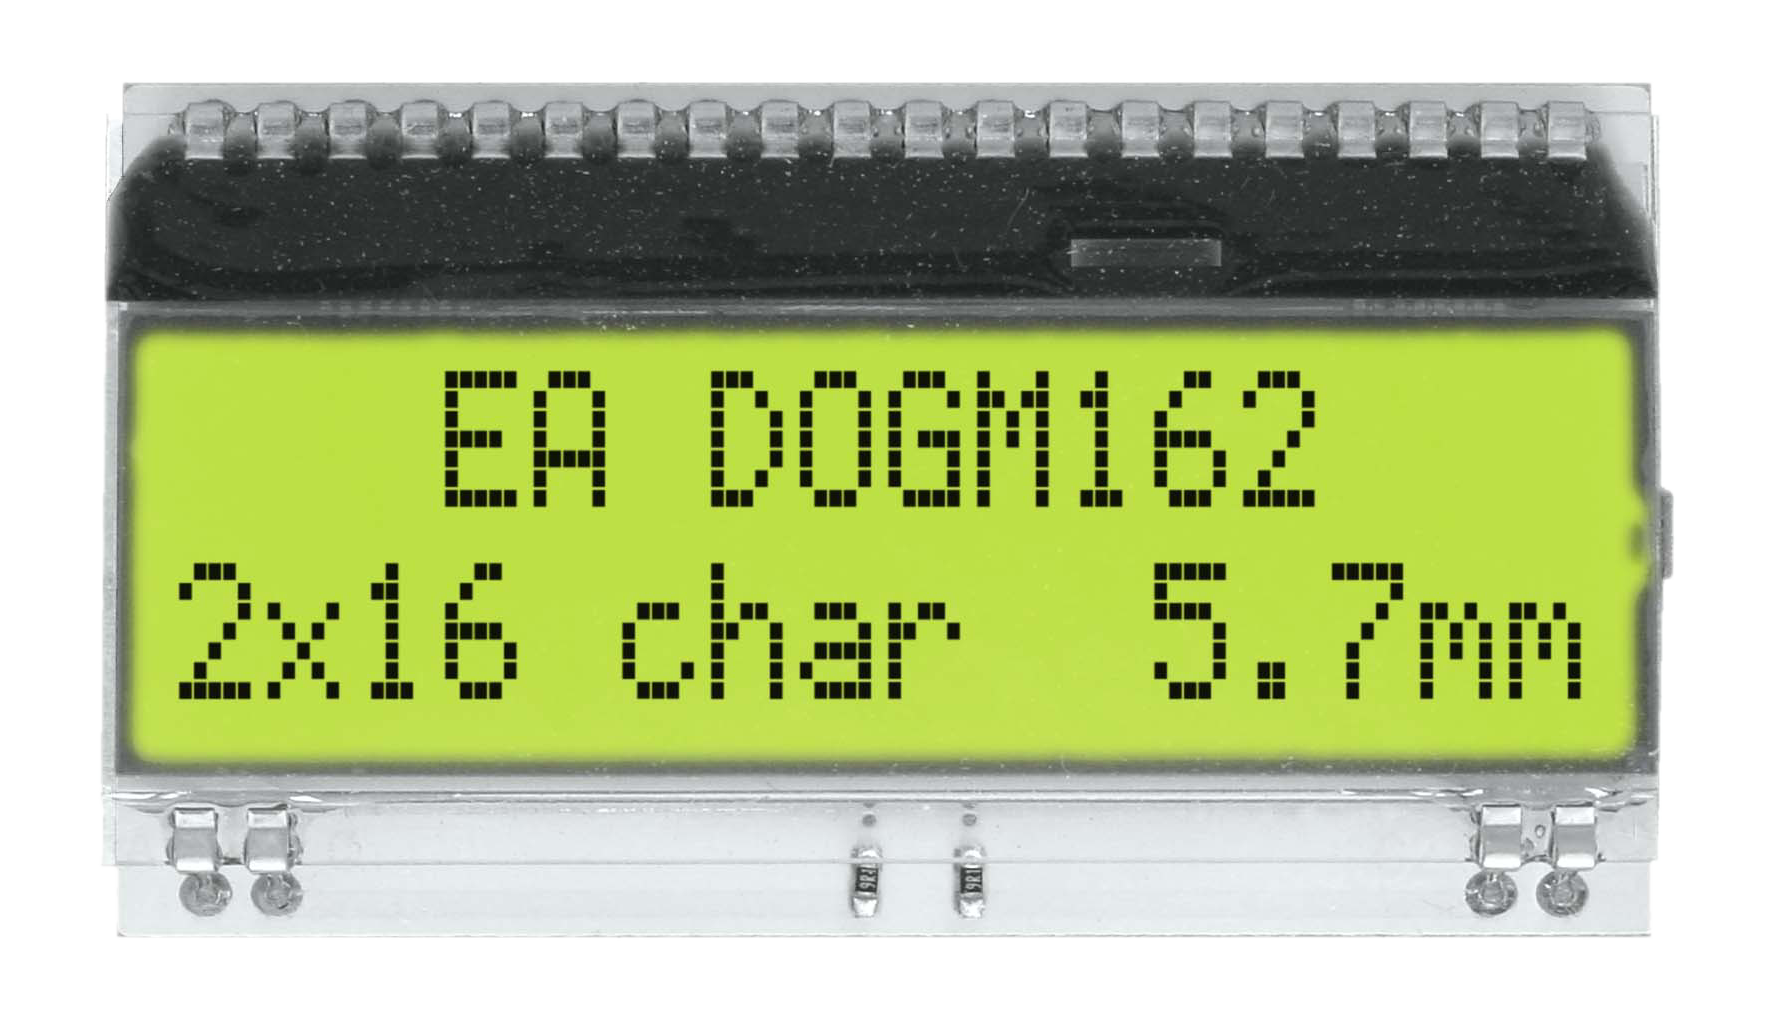 2x16 Character Display EA DOGM162L-A